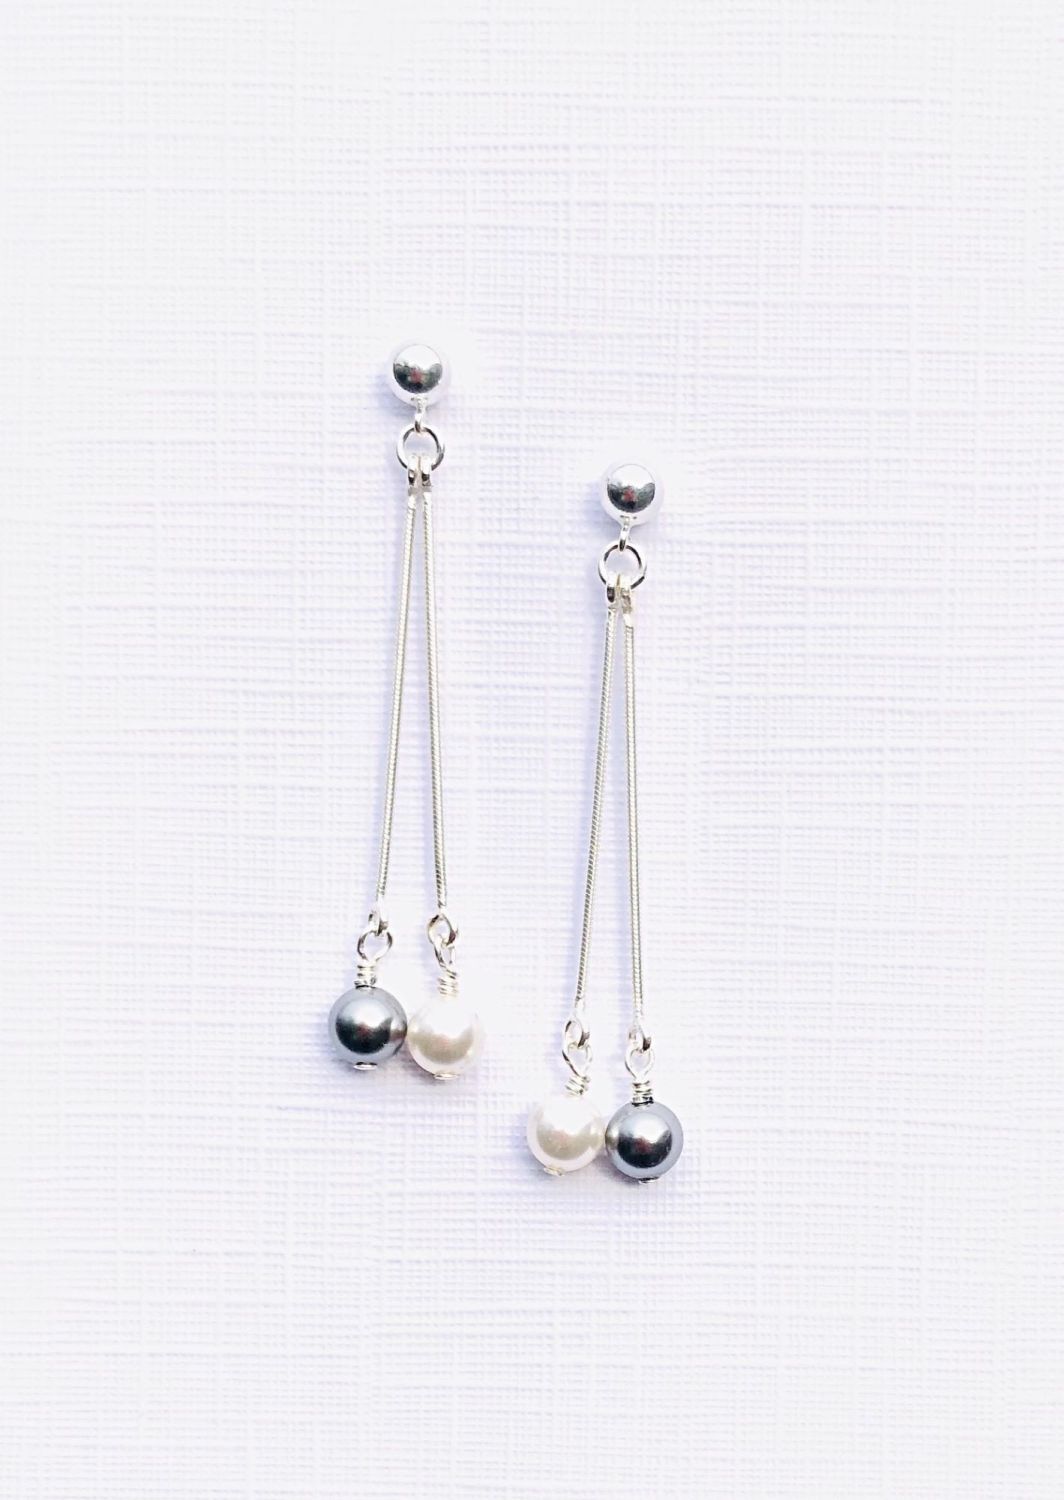 Earrings - Swarovski Pearls - Sterling Silver